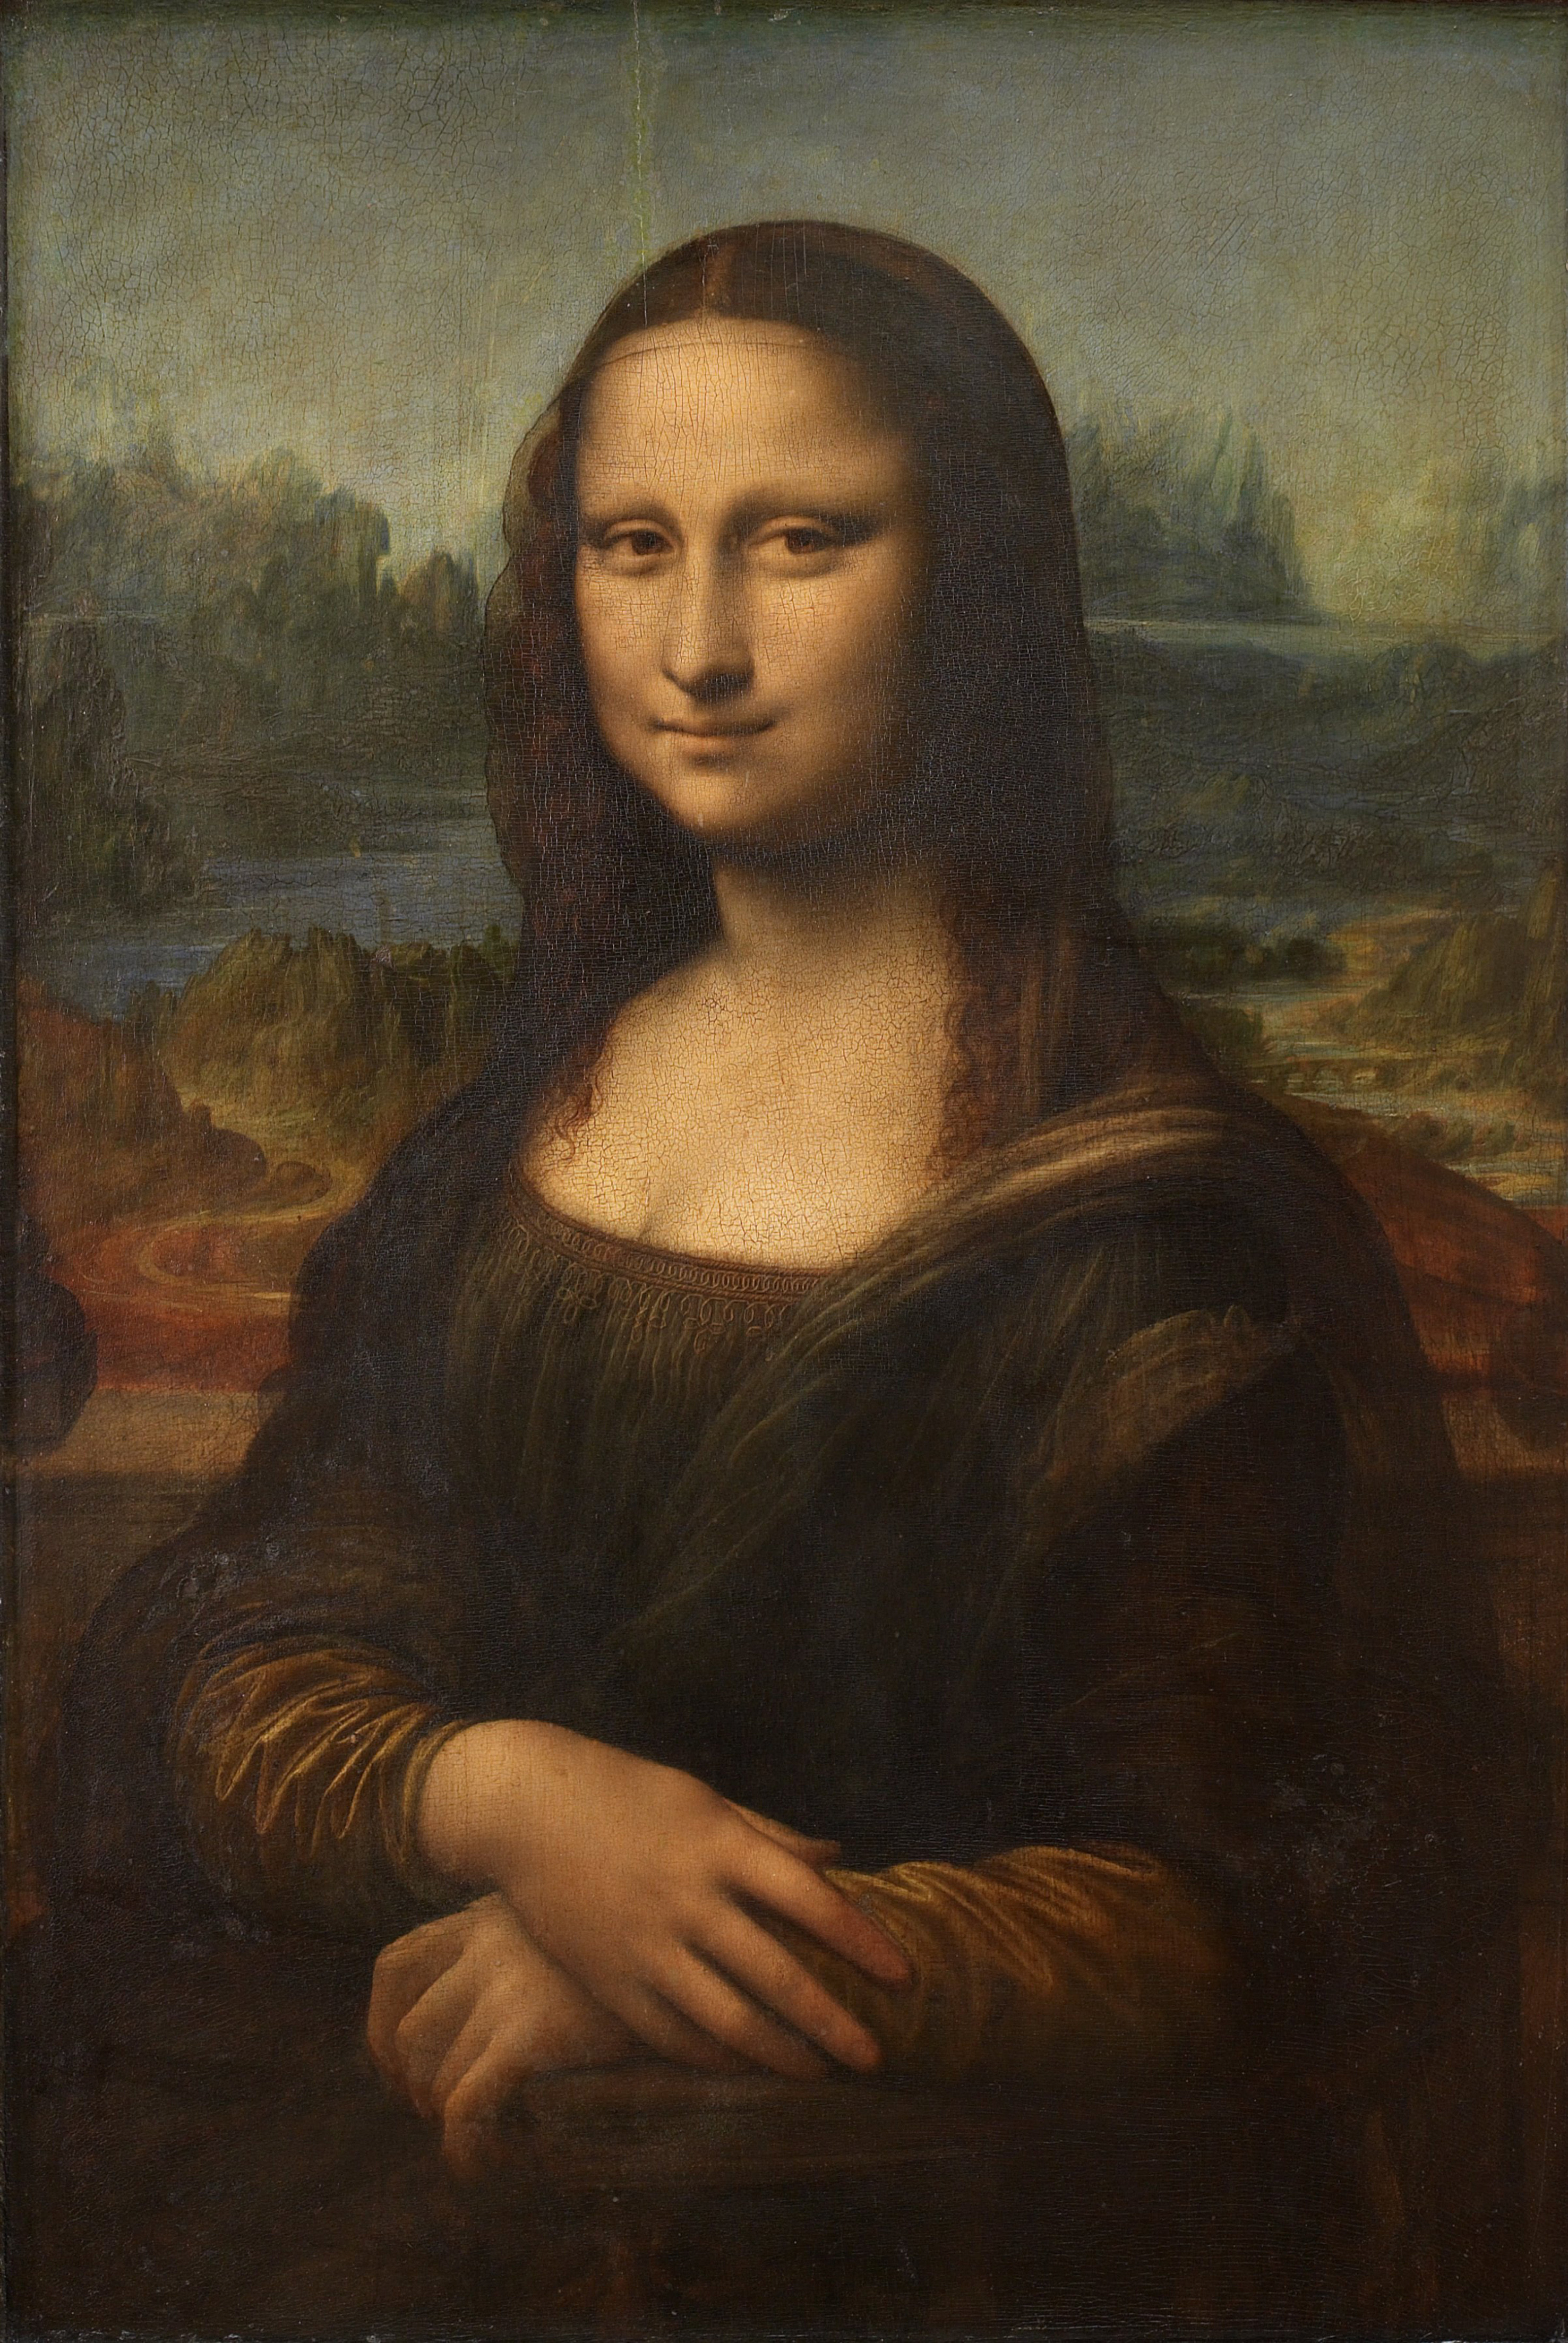 Mona Lisa by Leonardo da Vinci, oil on wood